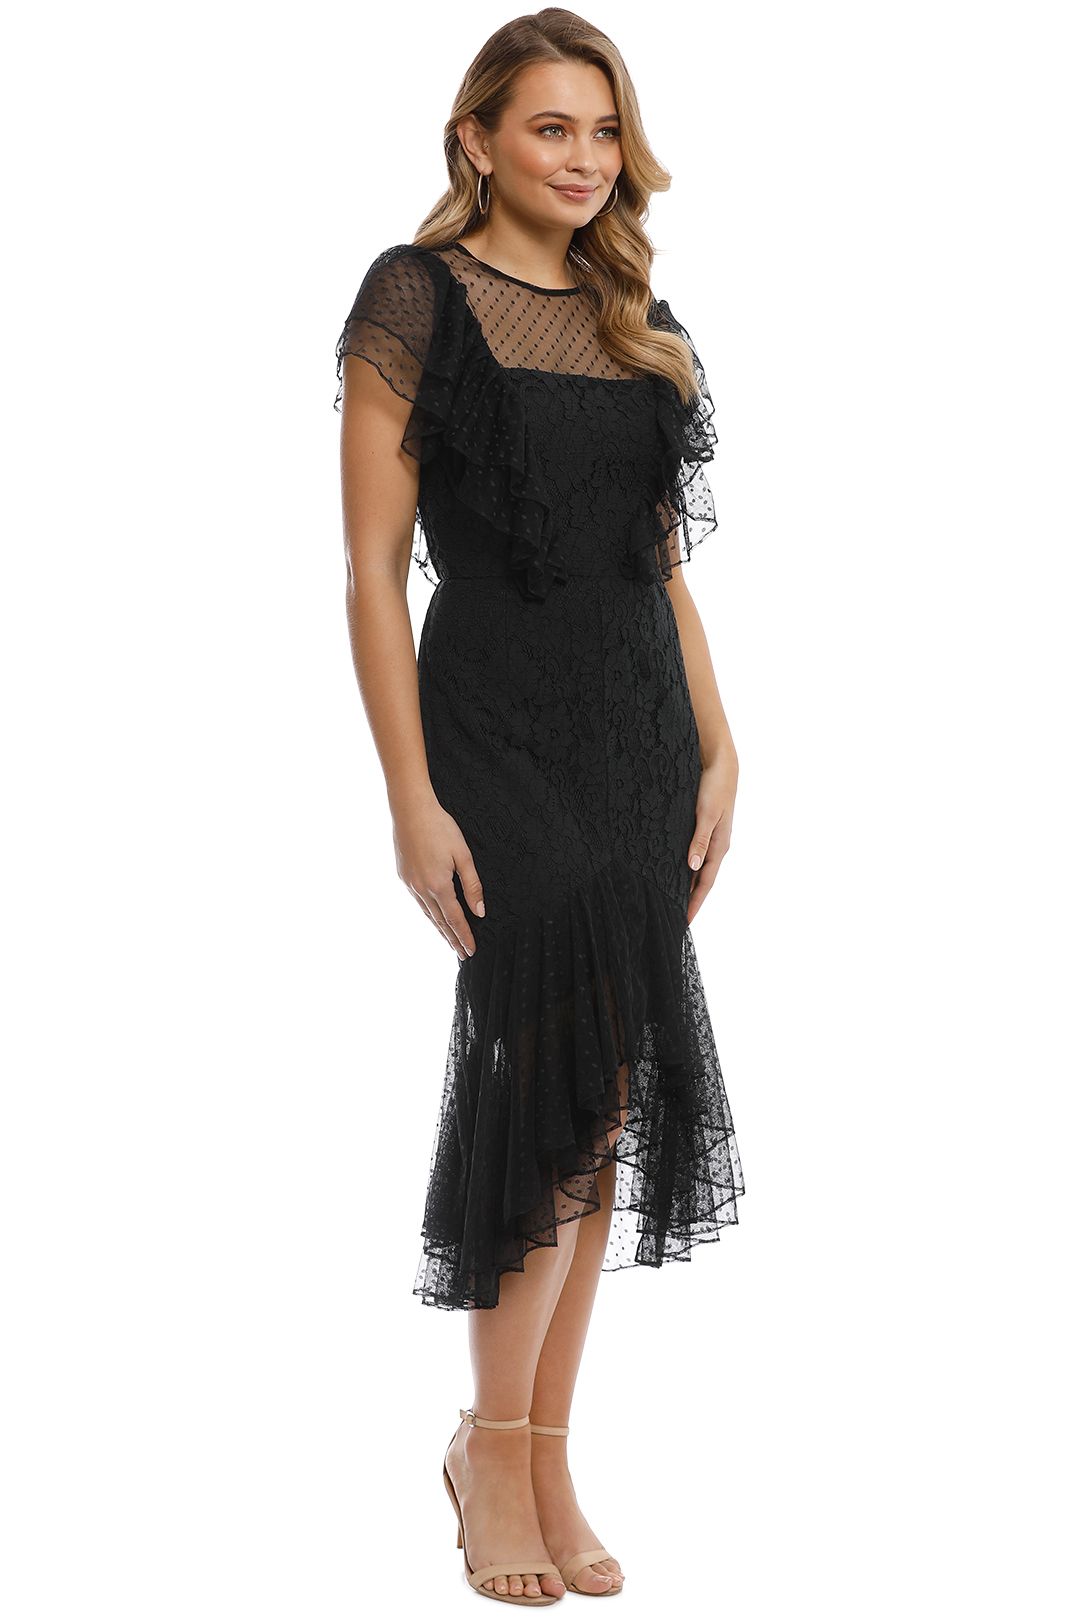 Cooper St - Rosie Lace Ruffle Dress - Black - Side